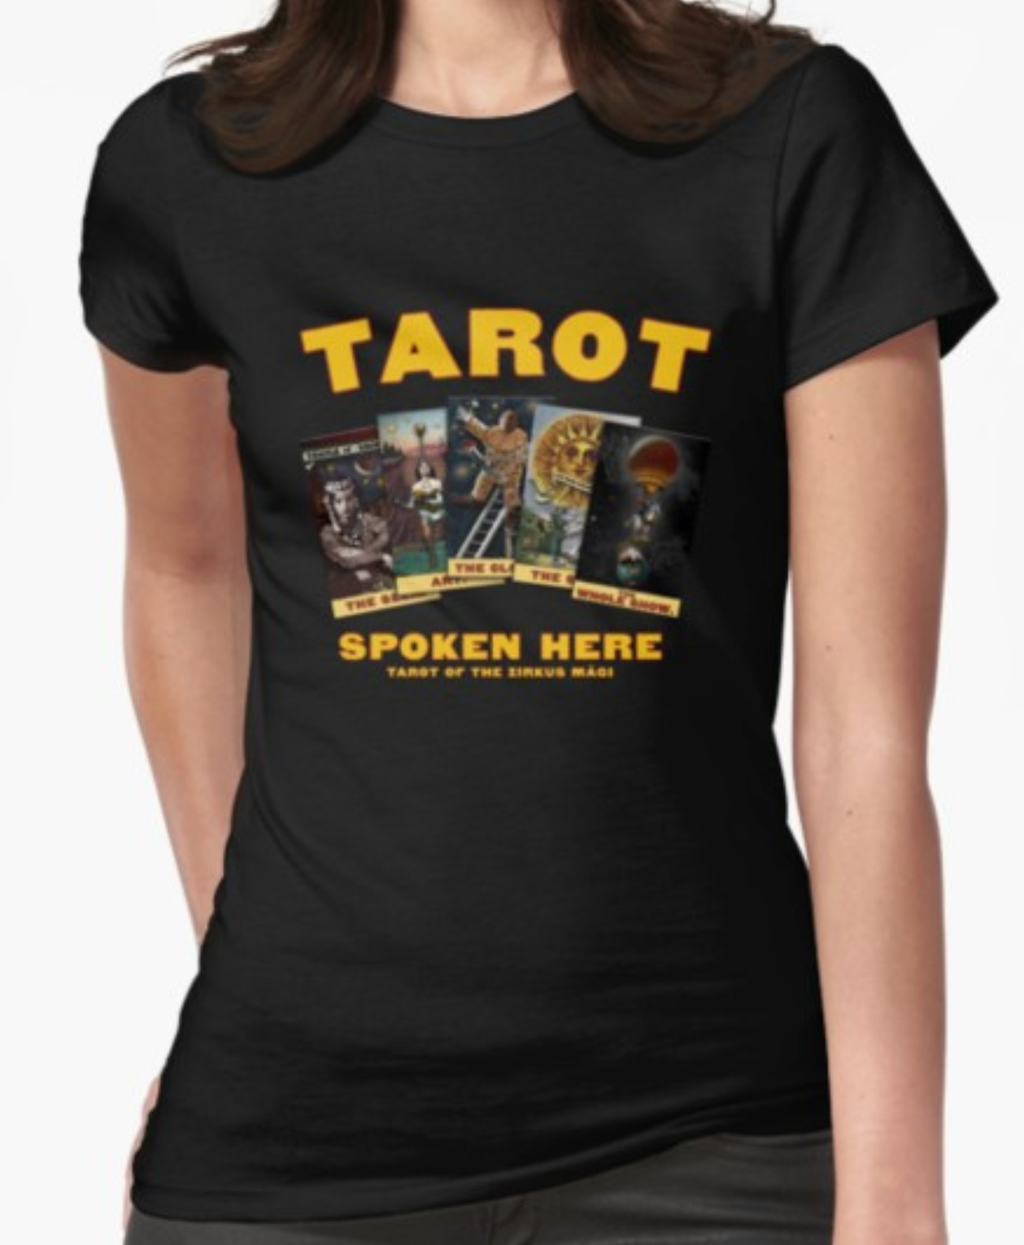 "Tarot Spoken Here" Fitted Women's T